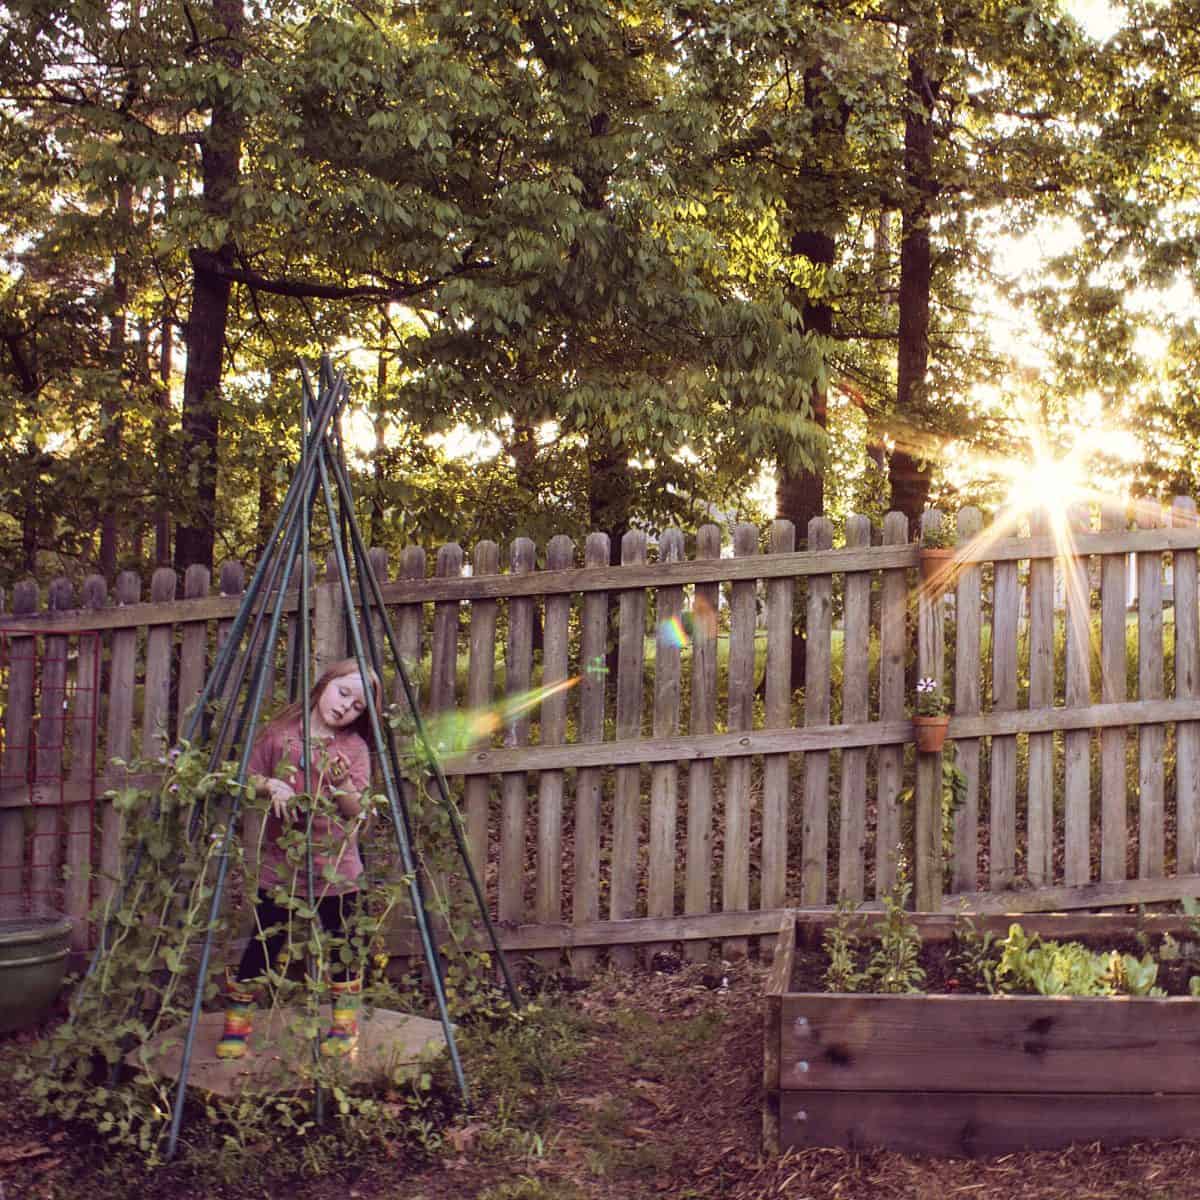 homeschool lessons from a backyard garden - interest led learning